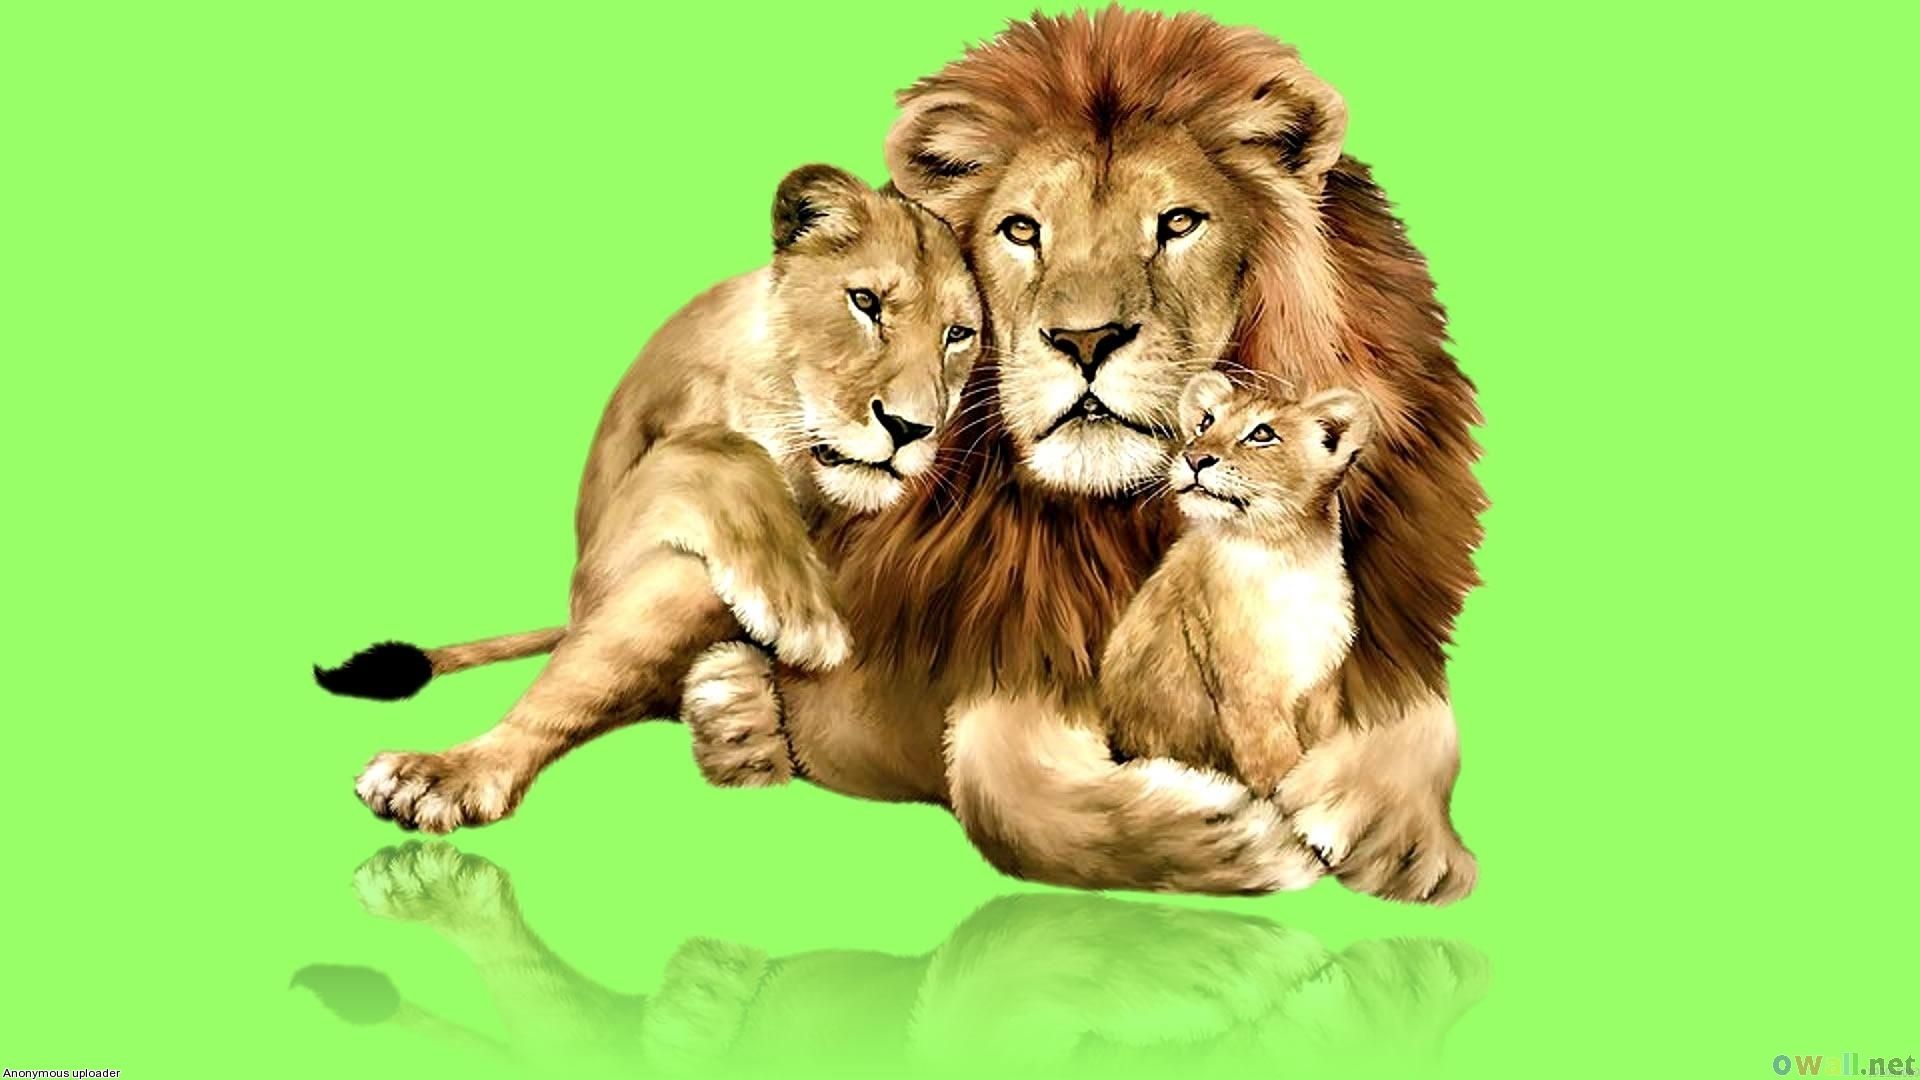 Download wallpaper: Lions, photo, family lions, download wallpaper for desktop